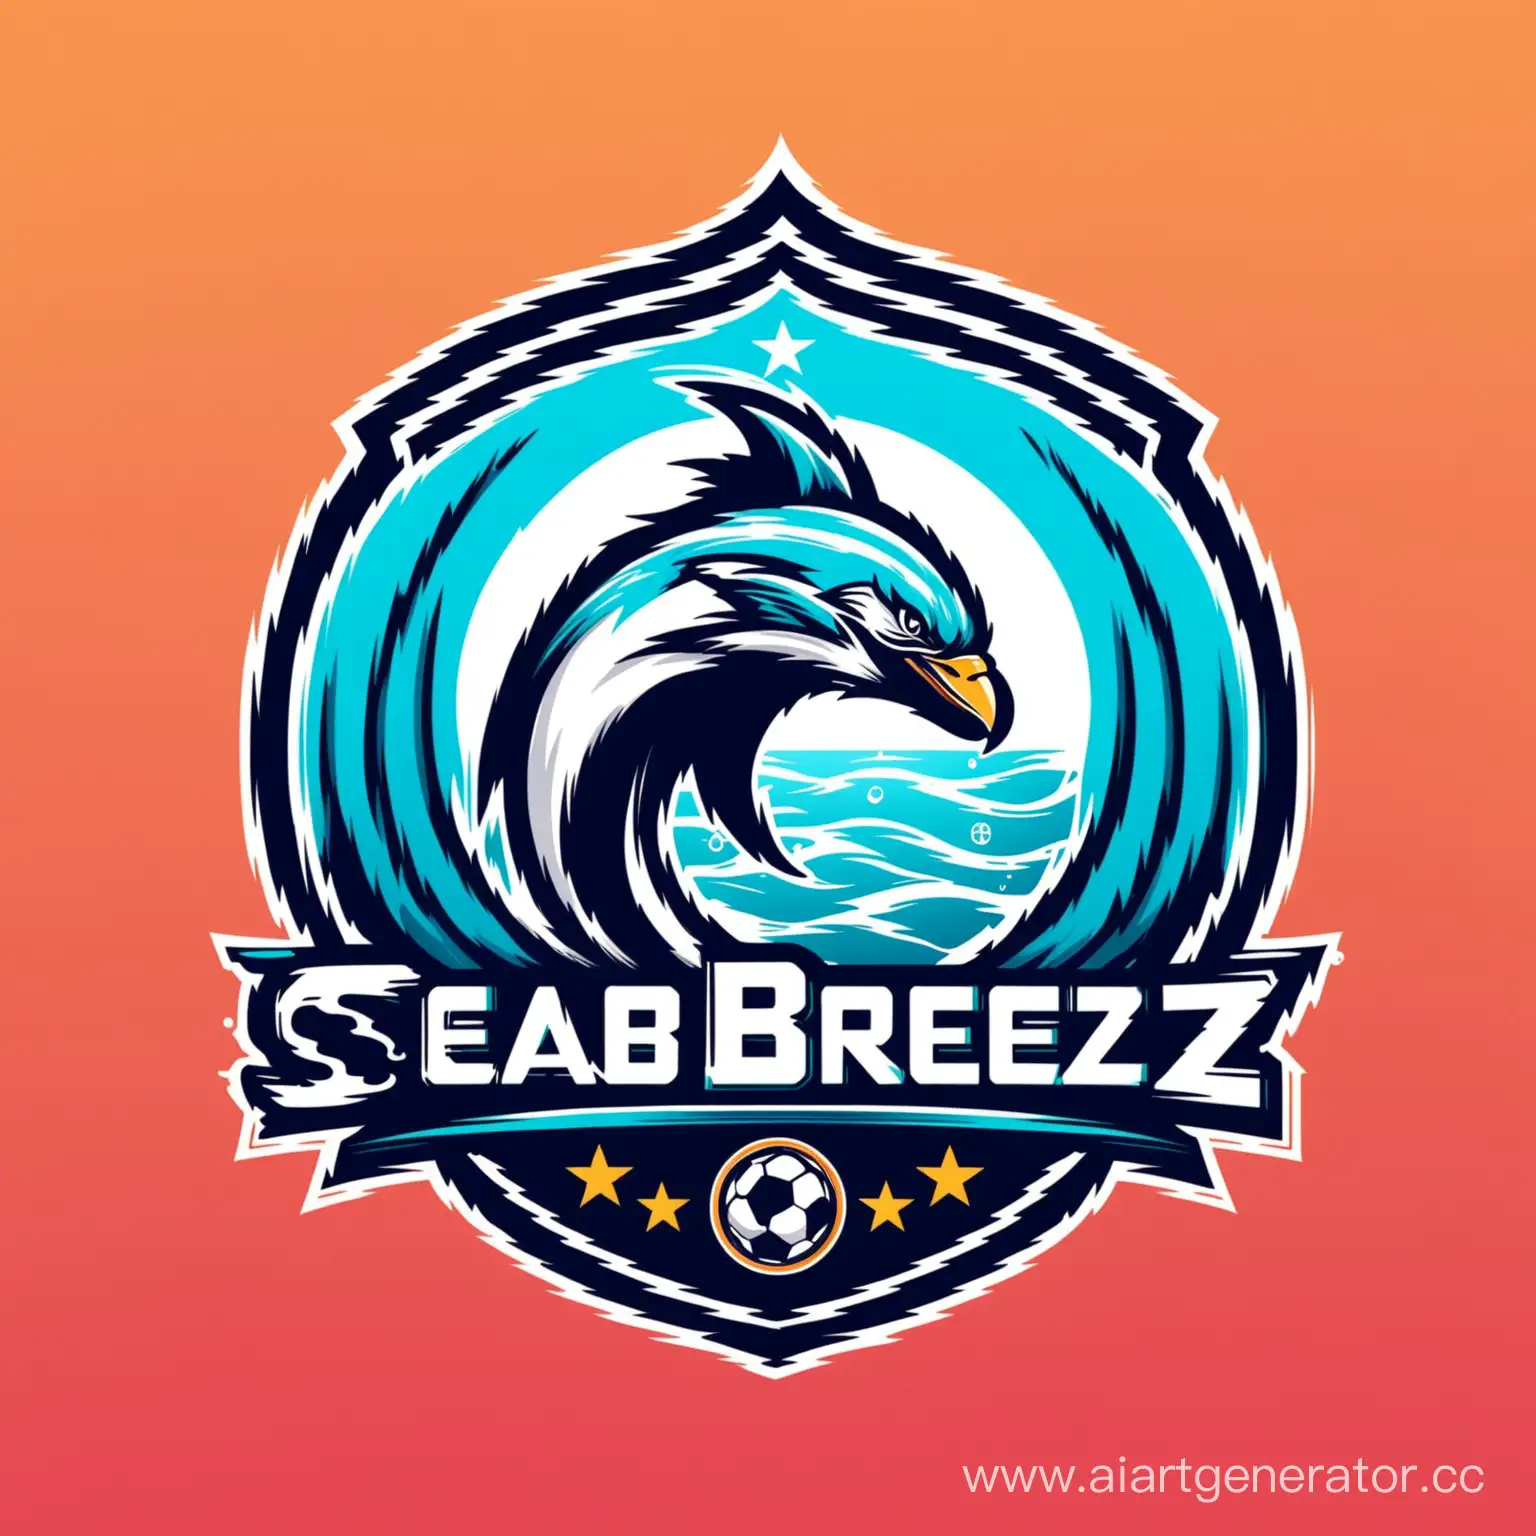 Sea-Breeze-Football-Club-Logo-with-Coastal-Vibes-and-Sporting-Spirit